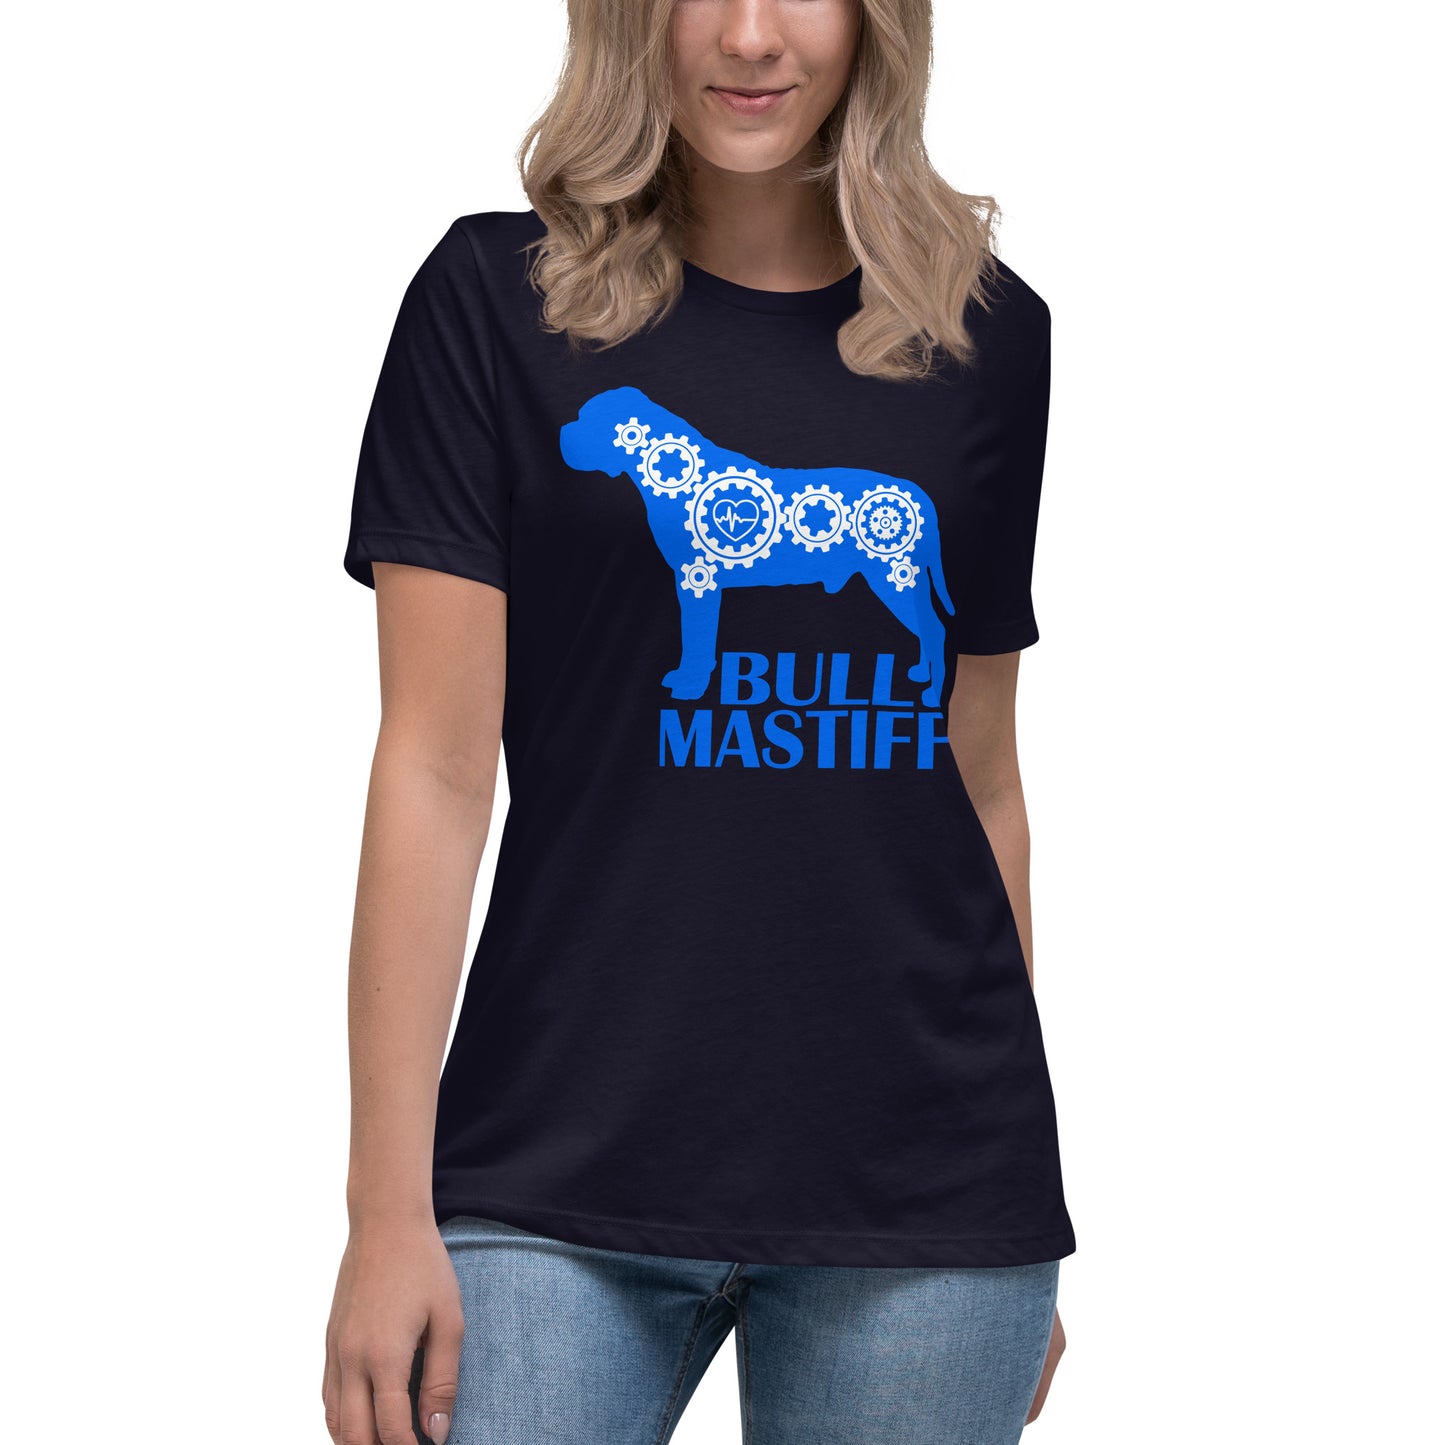 Bullmastif Bionic women’s navy t-shirt by Dog Artistry.